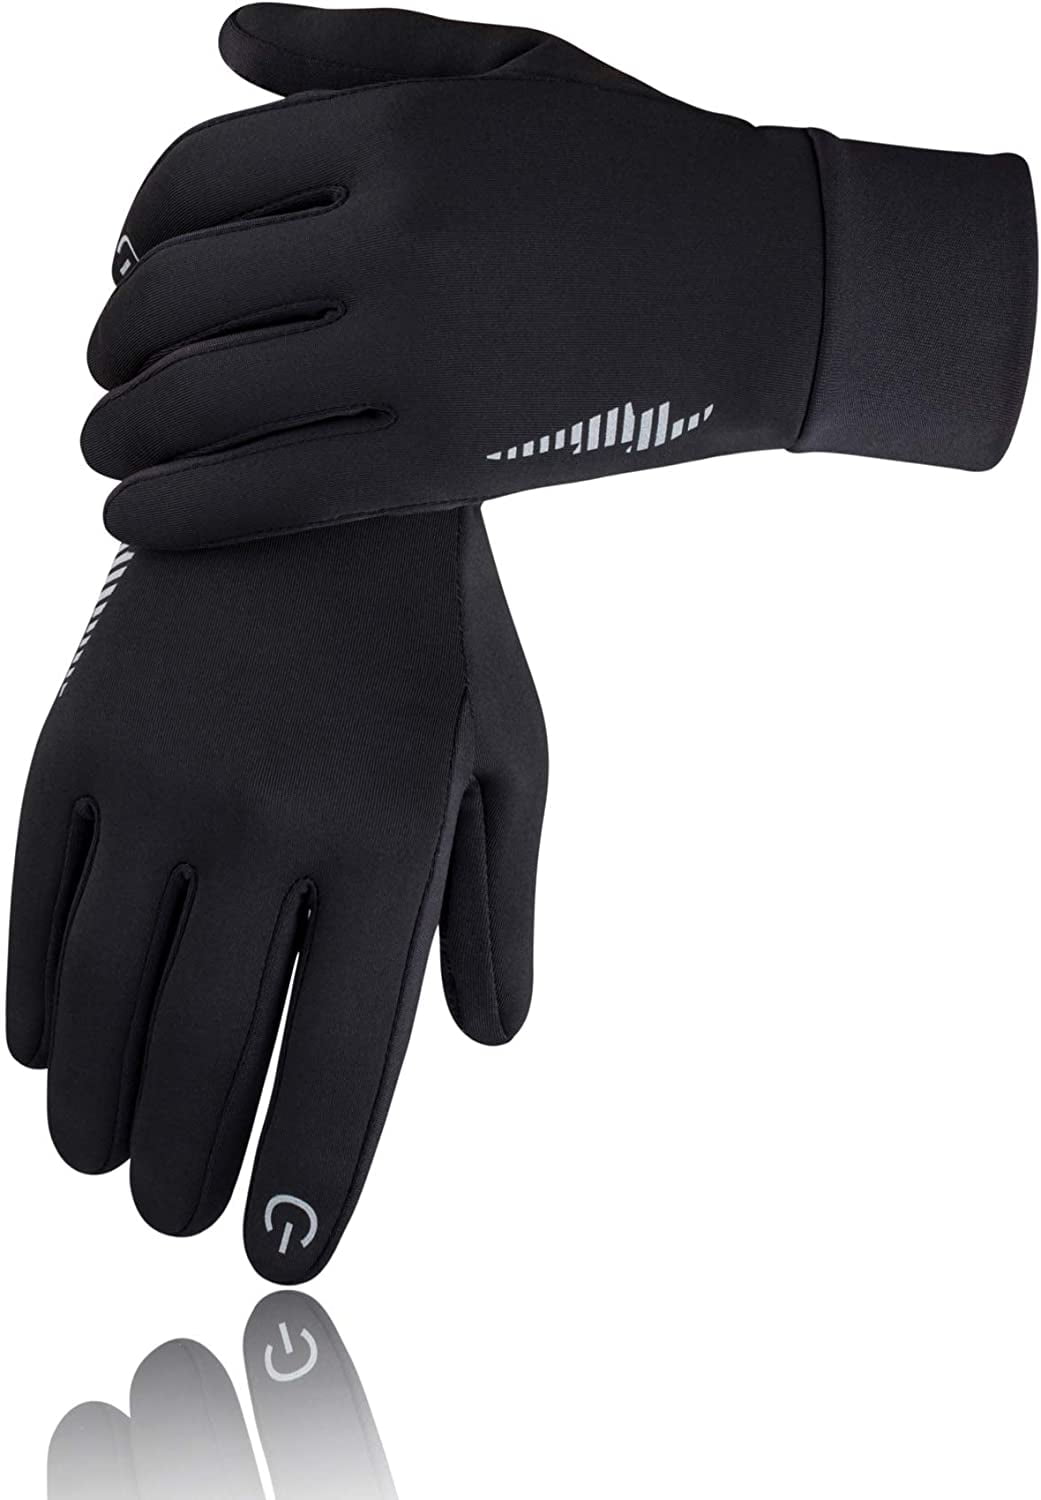 Fitgym Men Women Winter Gloves Touchscreen Lightweight Windproof Warm Gloves for Cycling Running Driving 